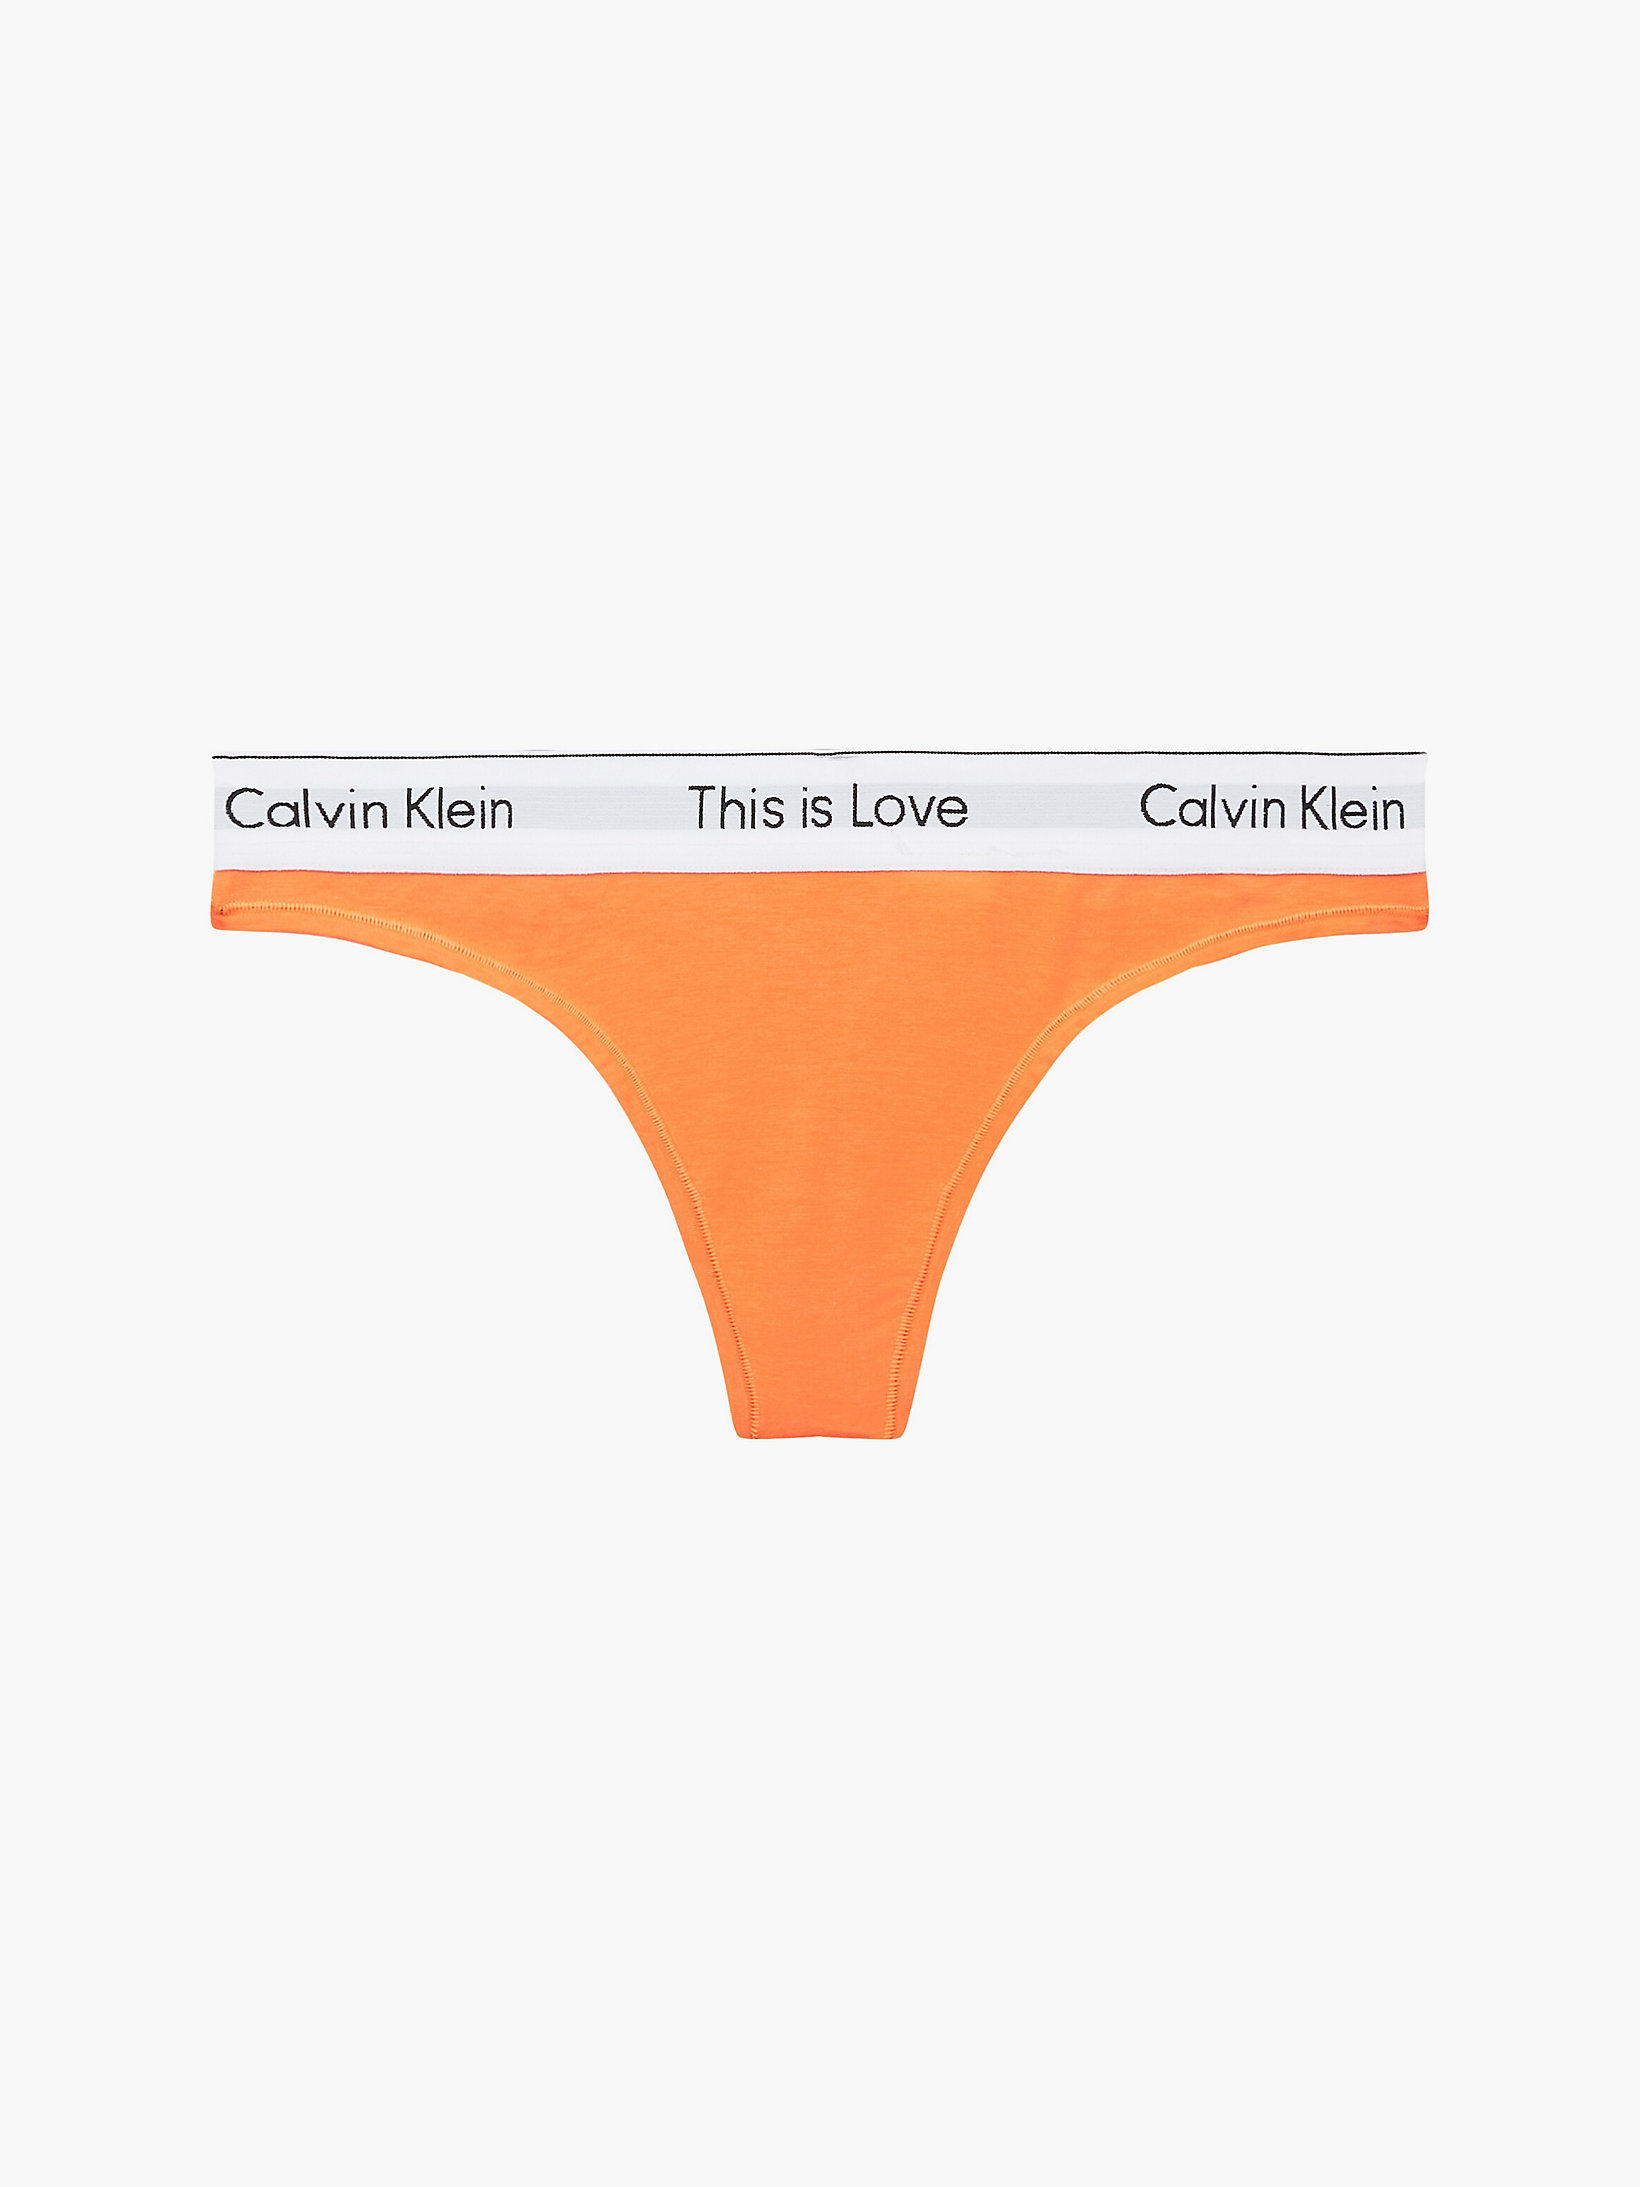 Tanga - Pride > Orange Juice > undefined mujer > Calvin Klein